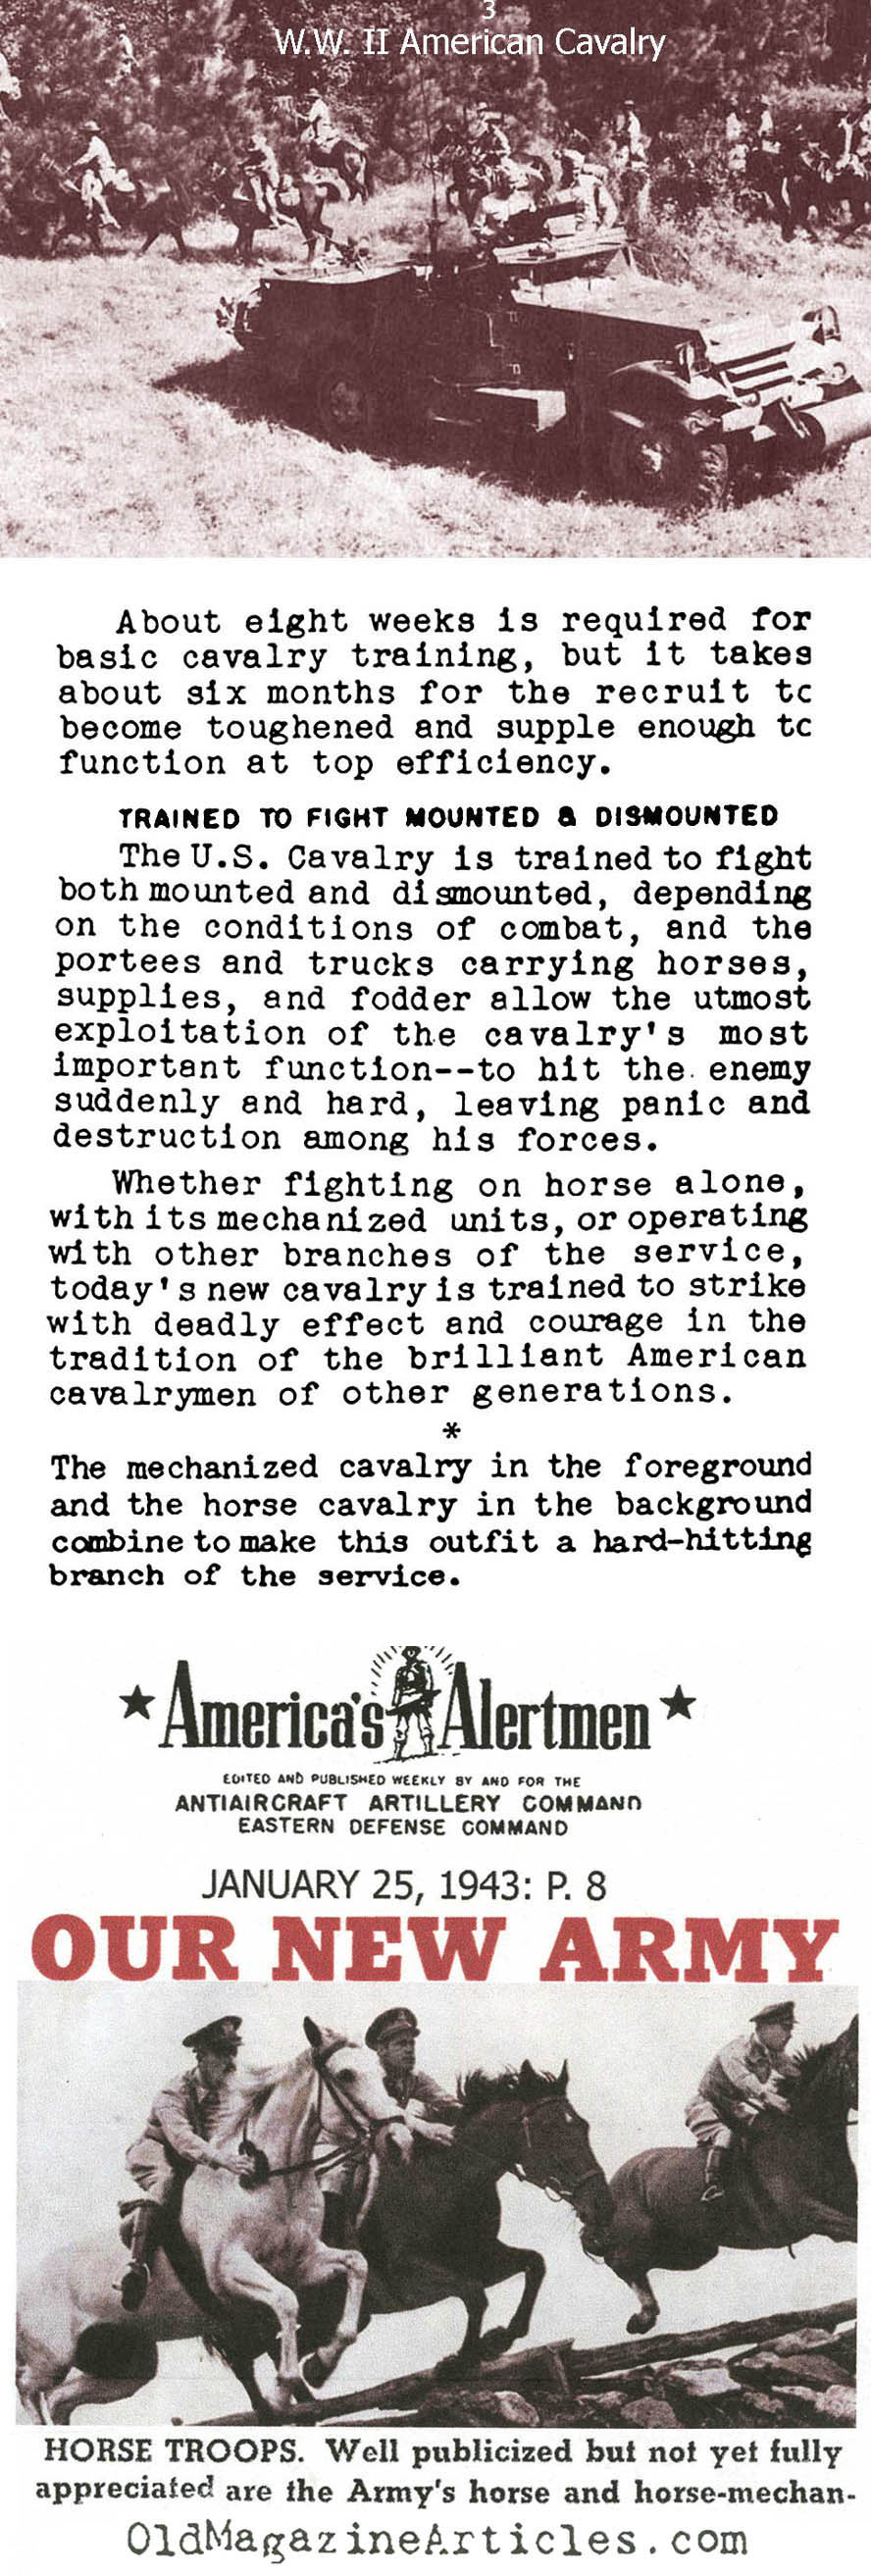 Optimistic Plans Regarding the Use of Cavalry (Collier's 1941 & The Alertmen, 1943)